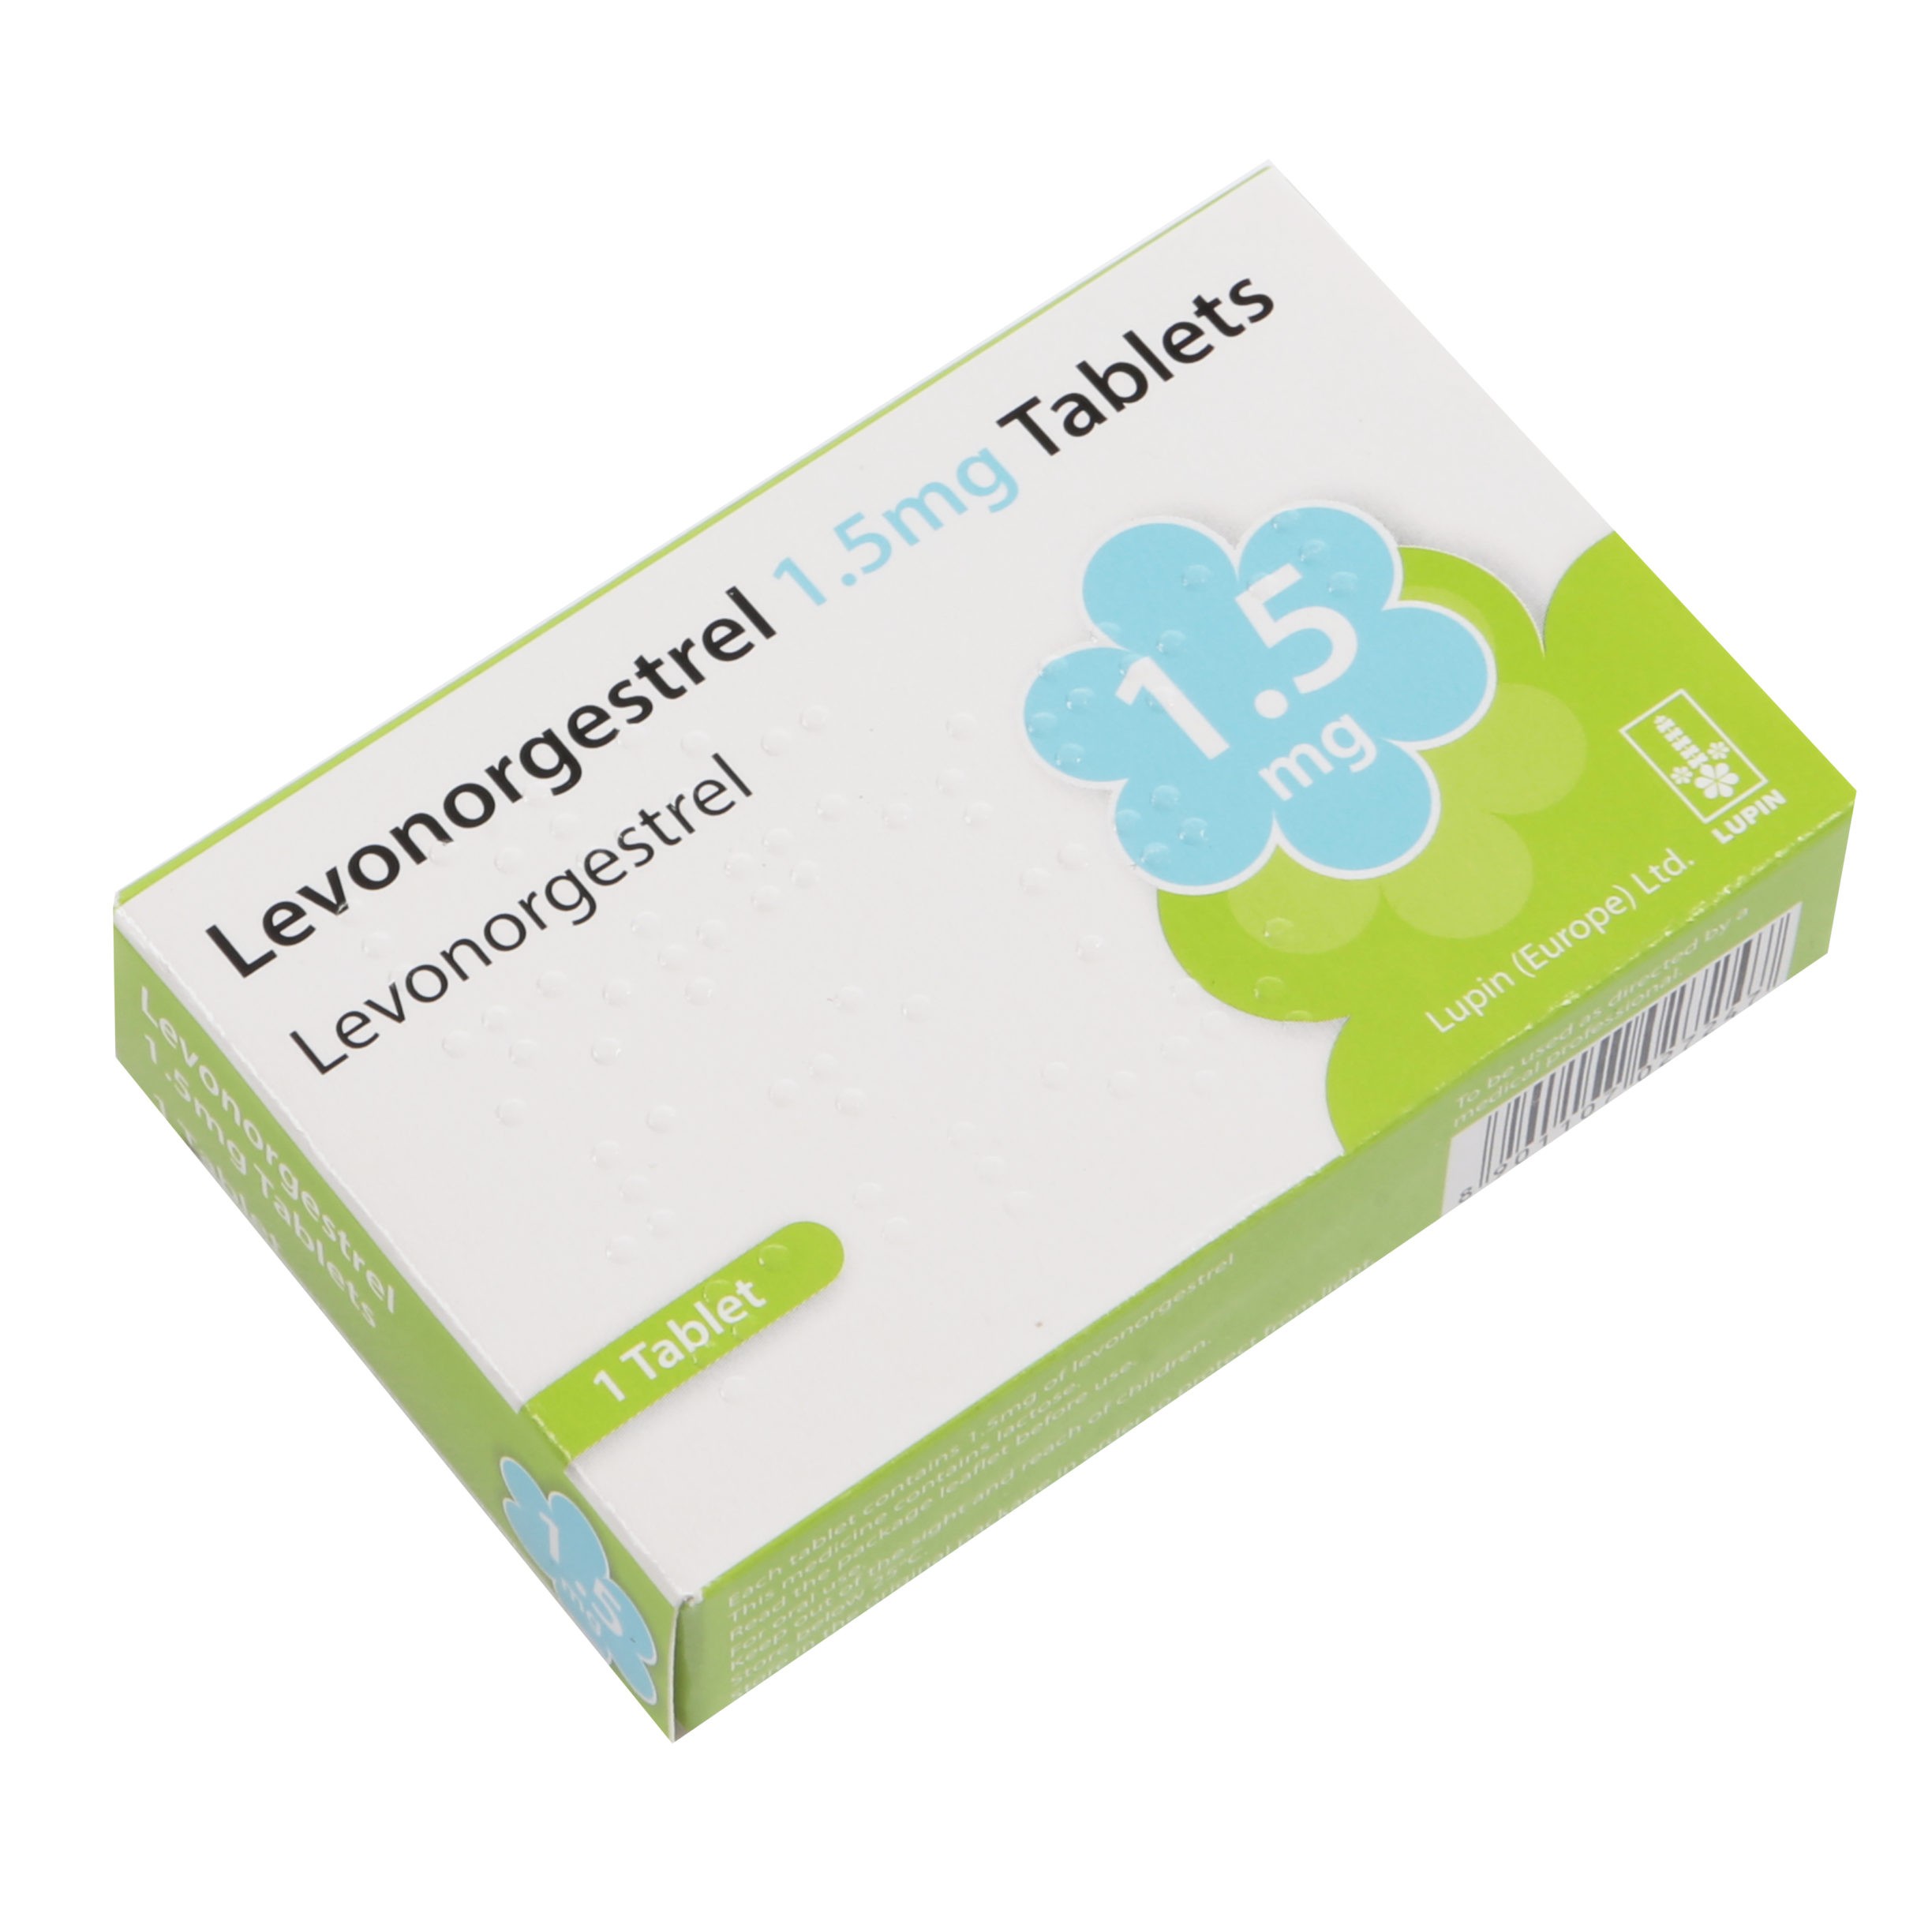 Levonogestrel (3-Day Pill) - 1 Tablet (single dose treatment)